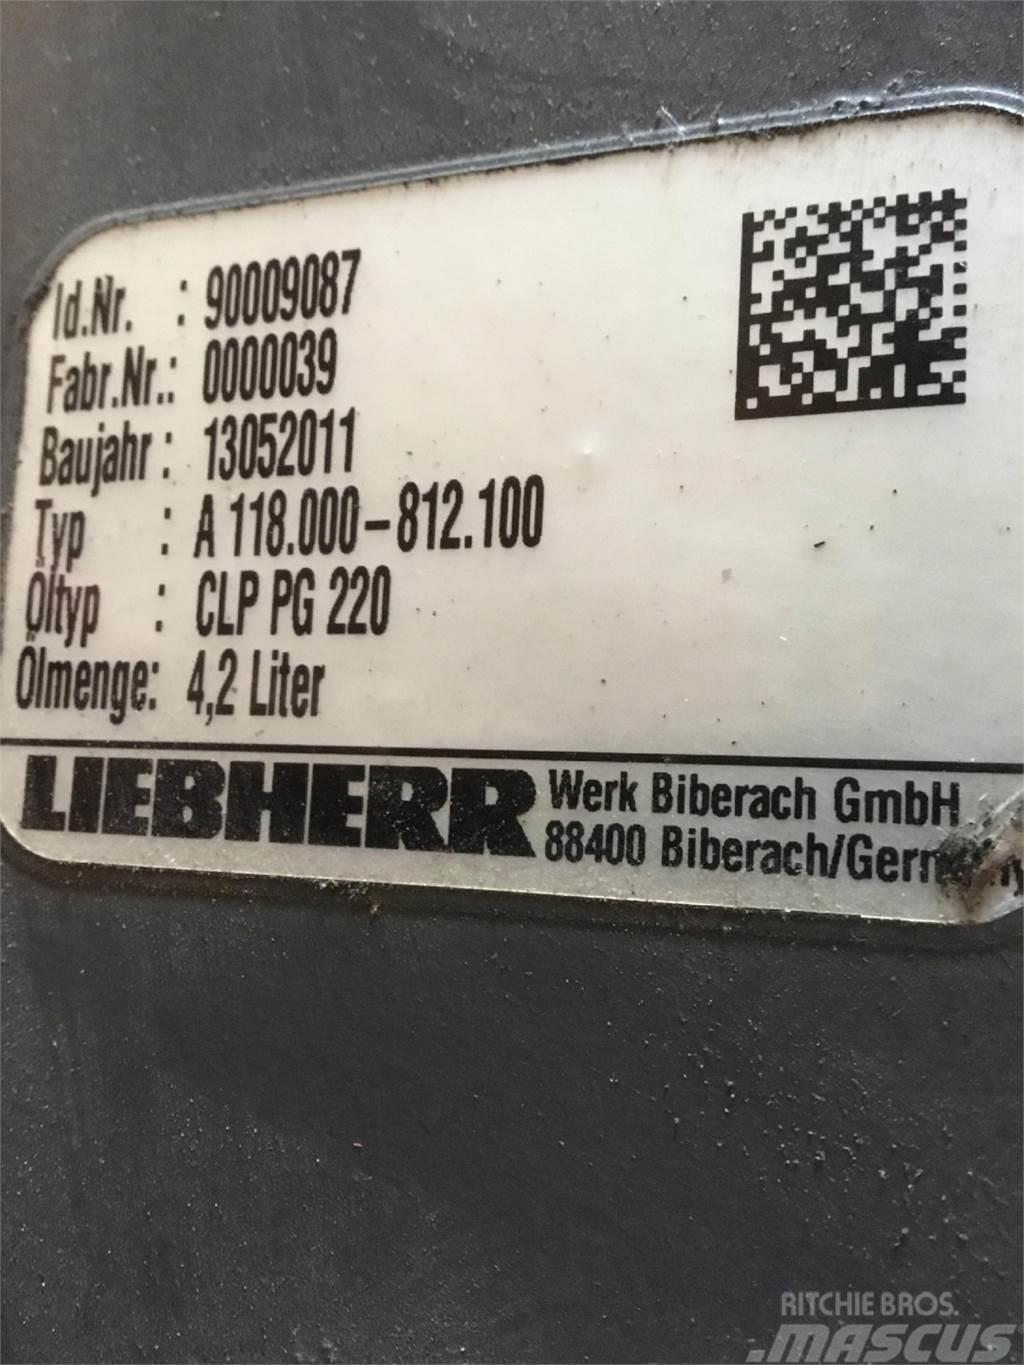 Liebherr MK 88-701 winch Parti e equipaggiamenti per Gru